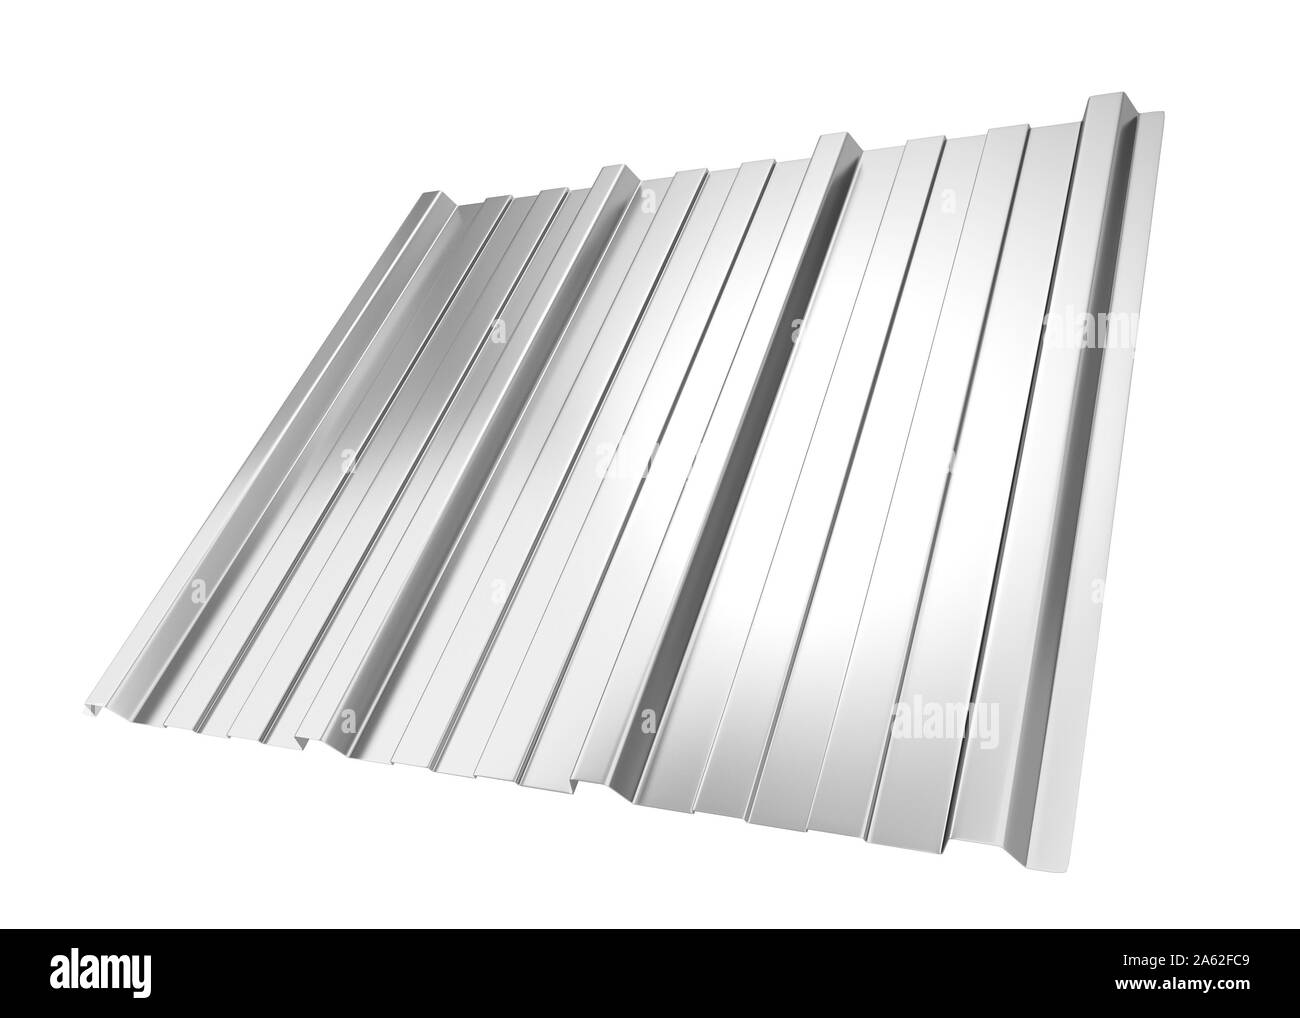 Corrugated metal sheet. 3d illustration isolated on white background Stock Photo